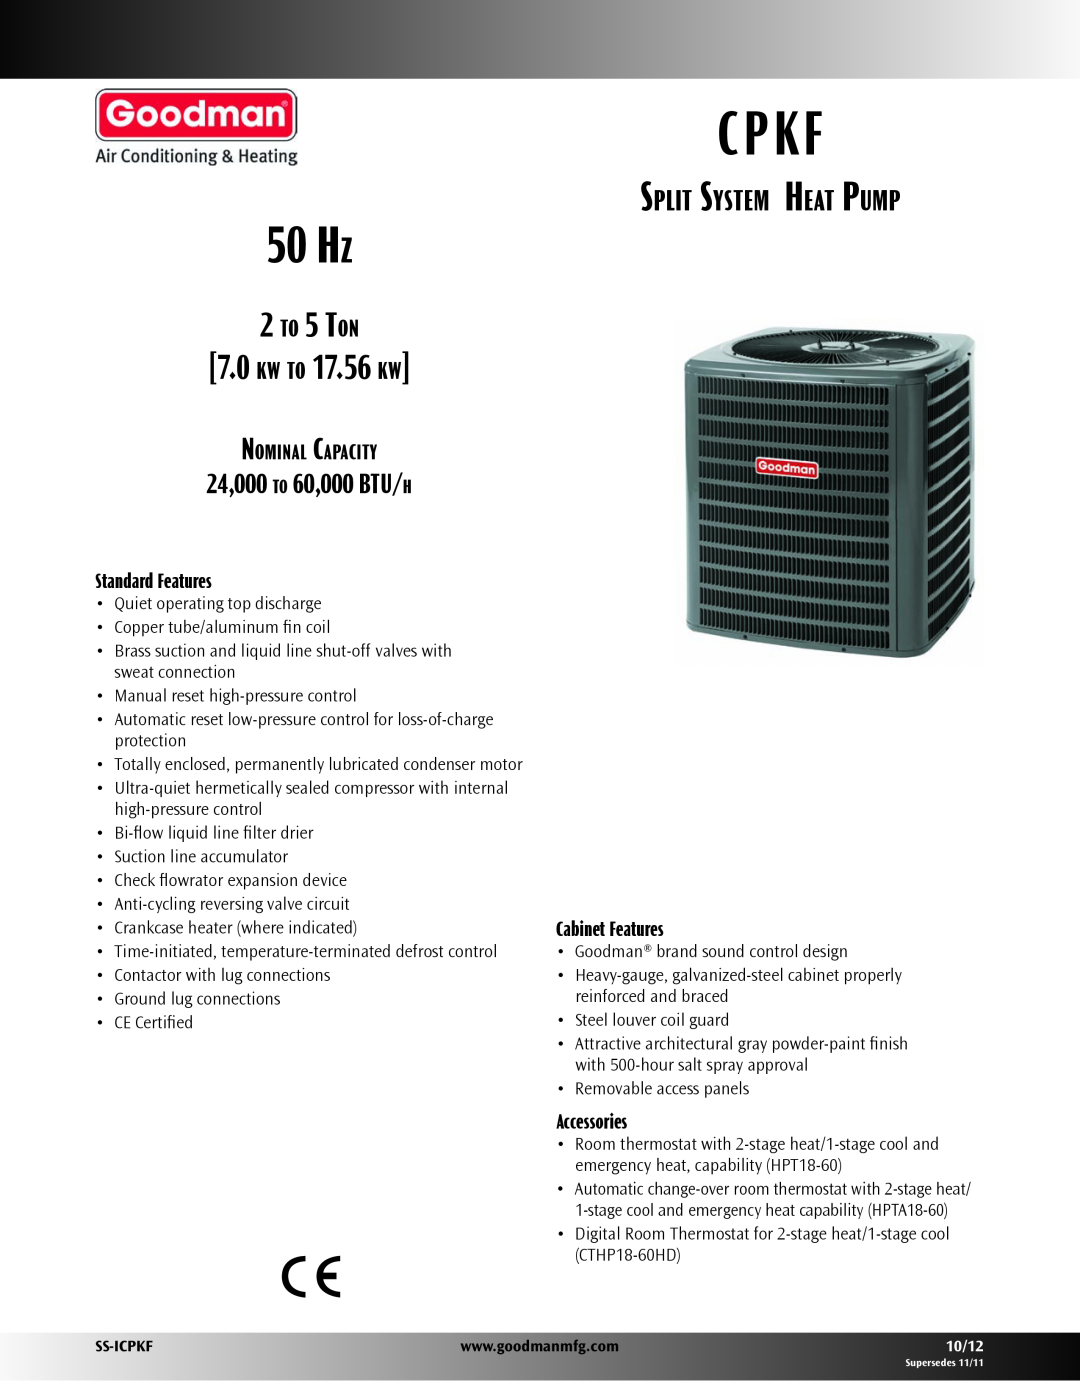 Goodman Mfg CPKF Split System Heat Pump manual 24,000 to 60,000 BTU/h, Nominal Capacity, Standard Features, Accessories 